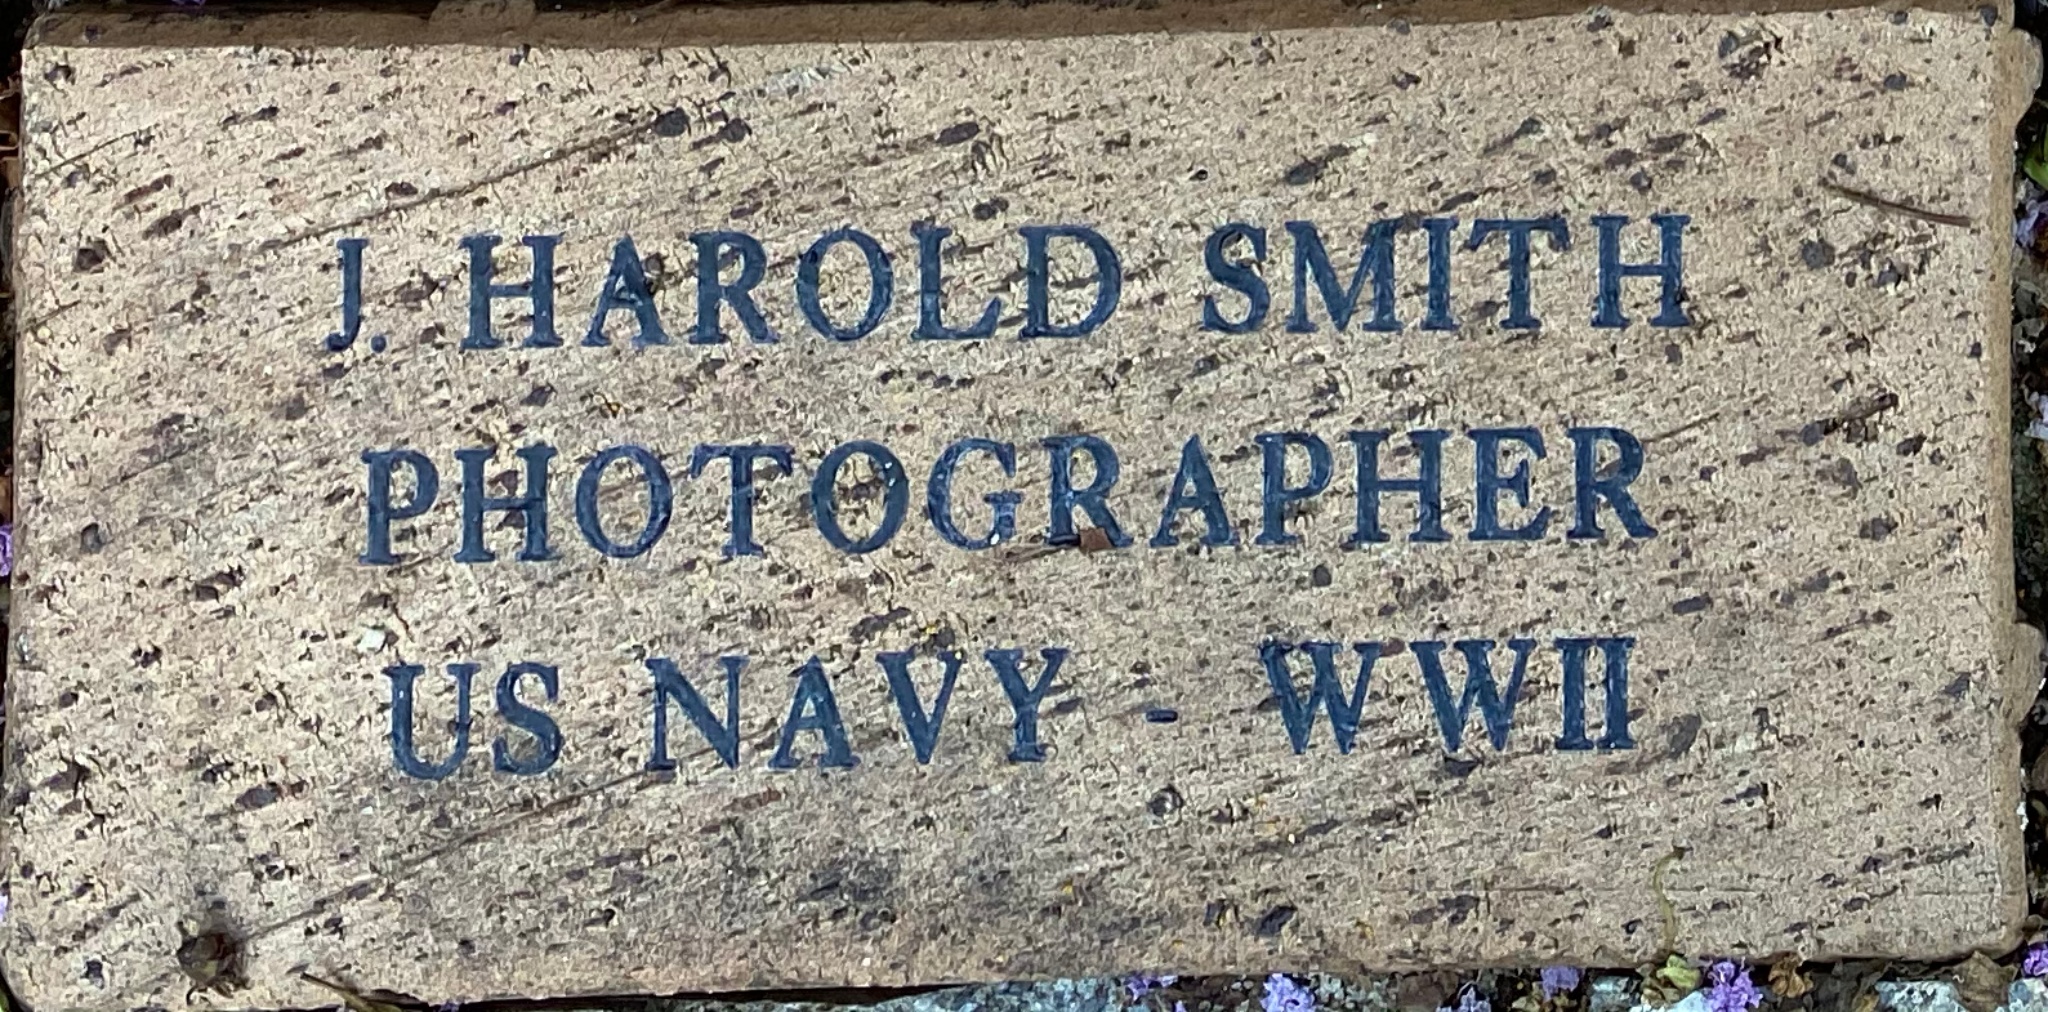 J. HAROLD SMITH PHOTOGRAPHER US NAVY – WWII